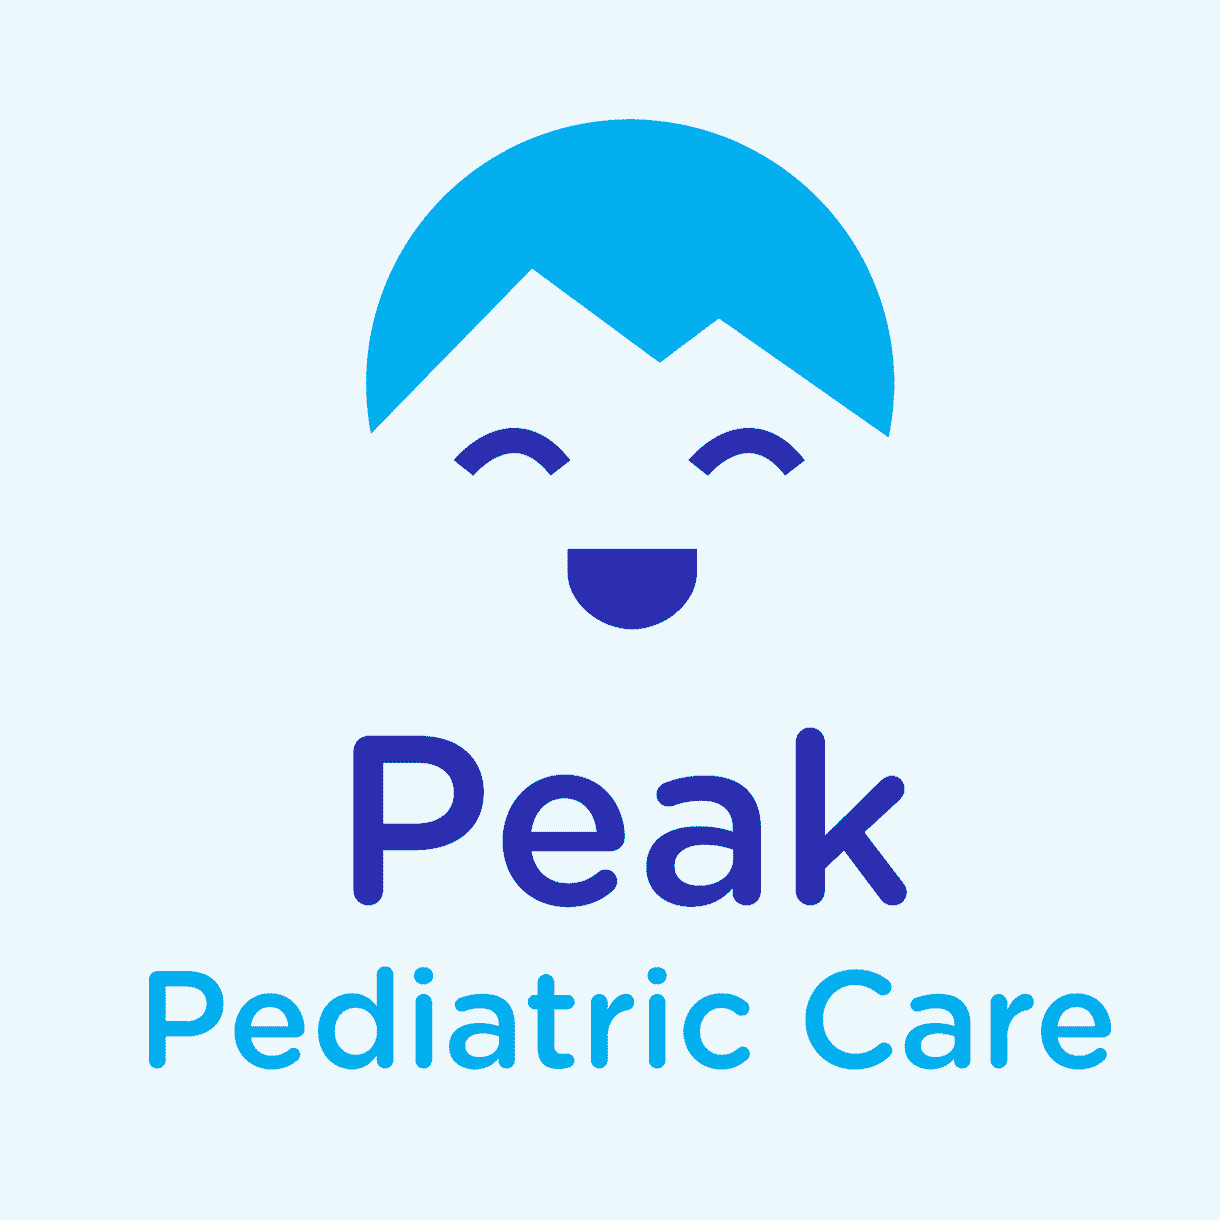 Pediatric dentist logo design Royalty Free Vector Image